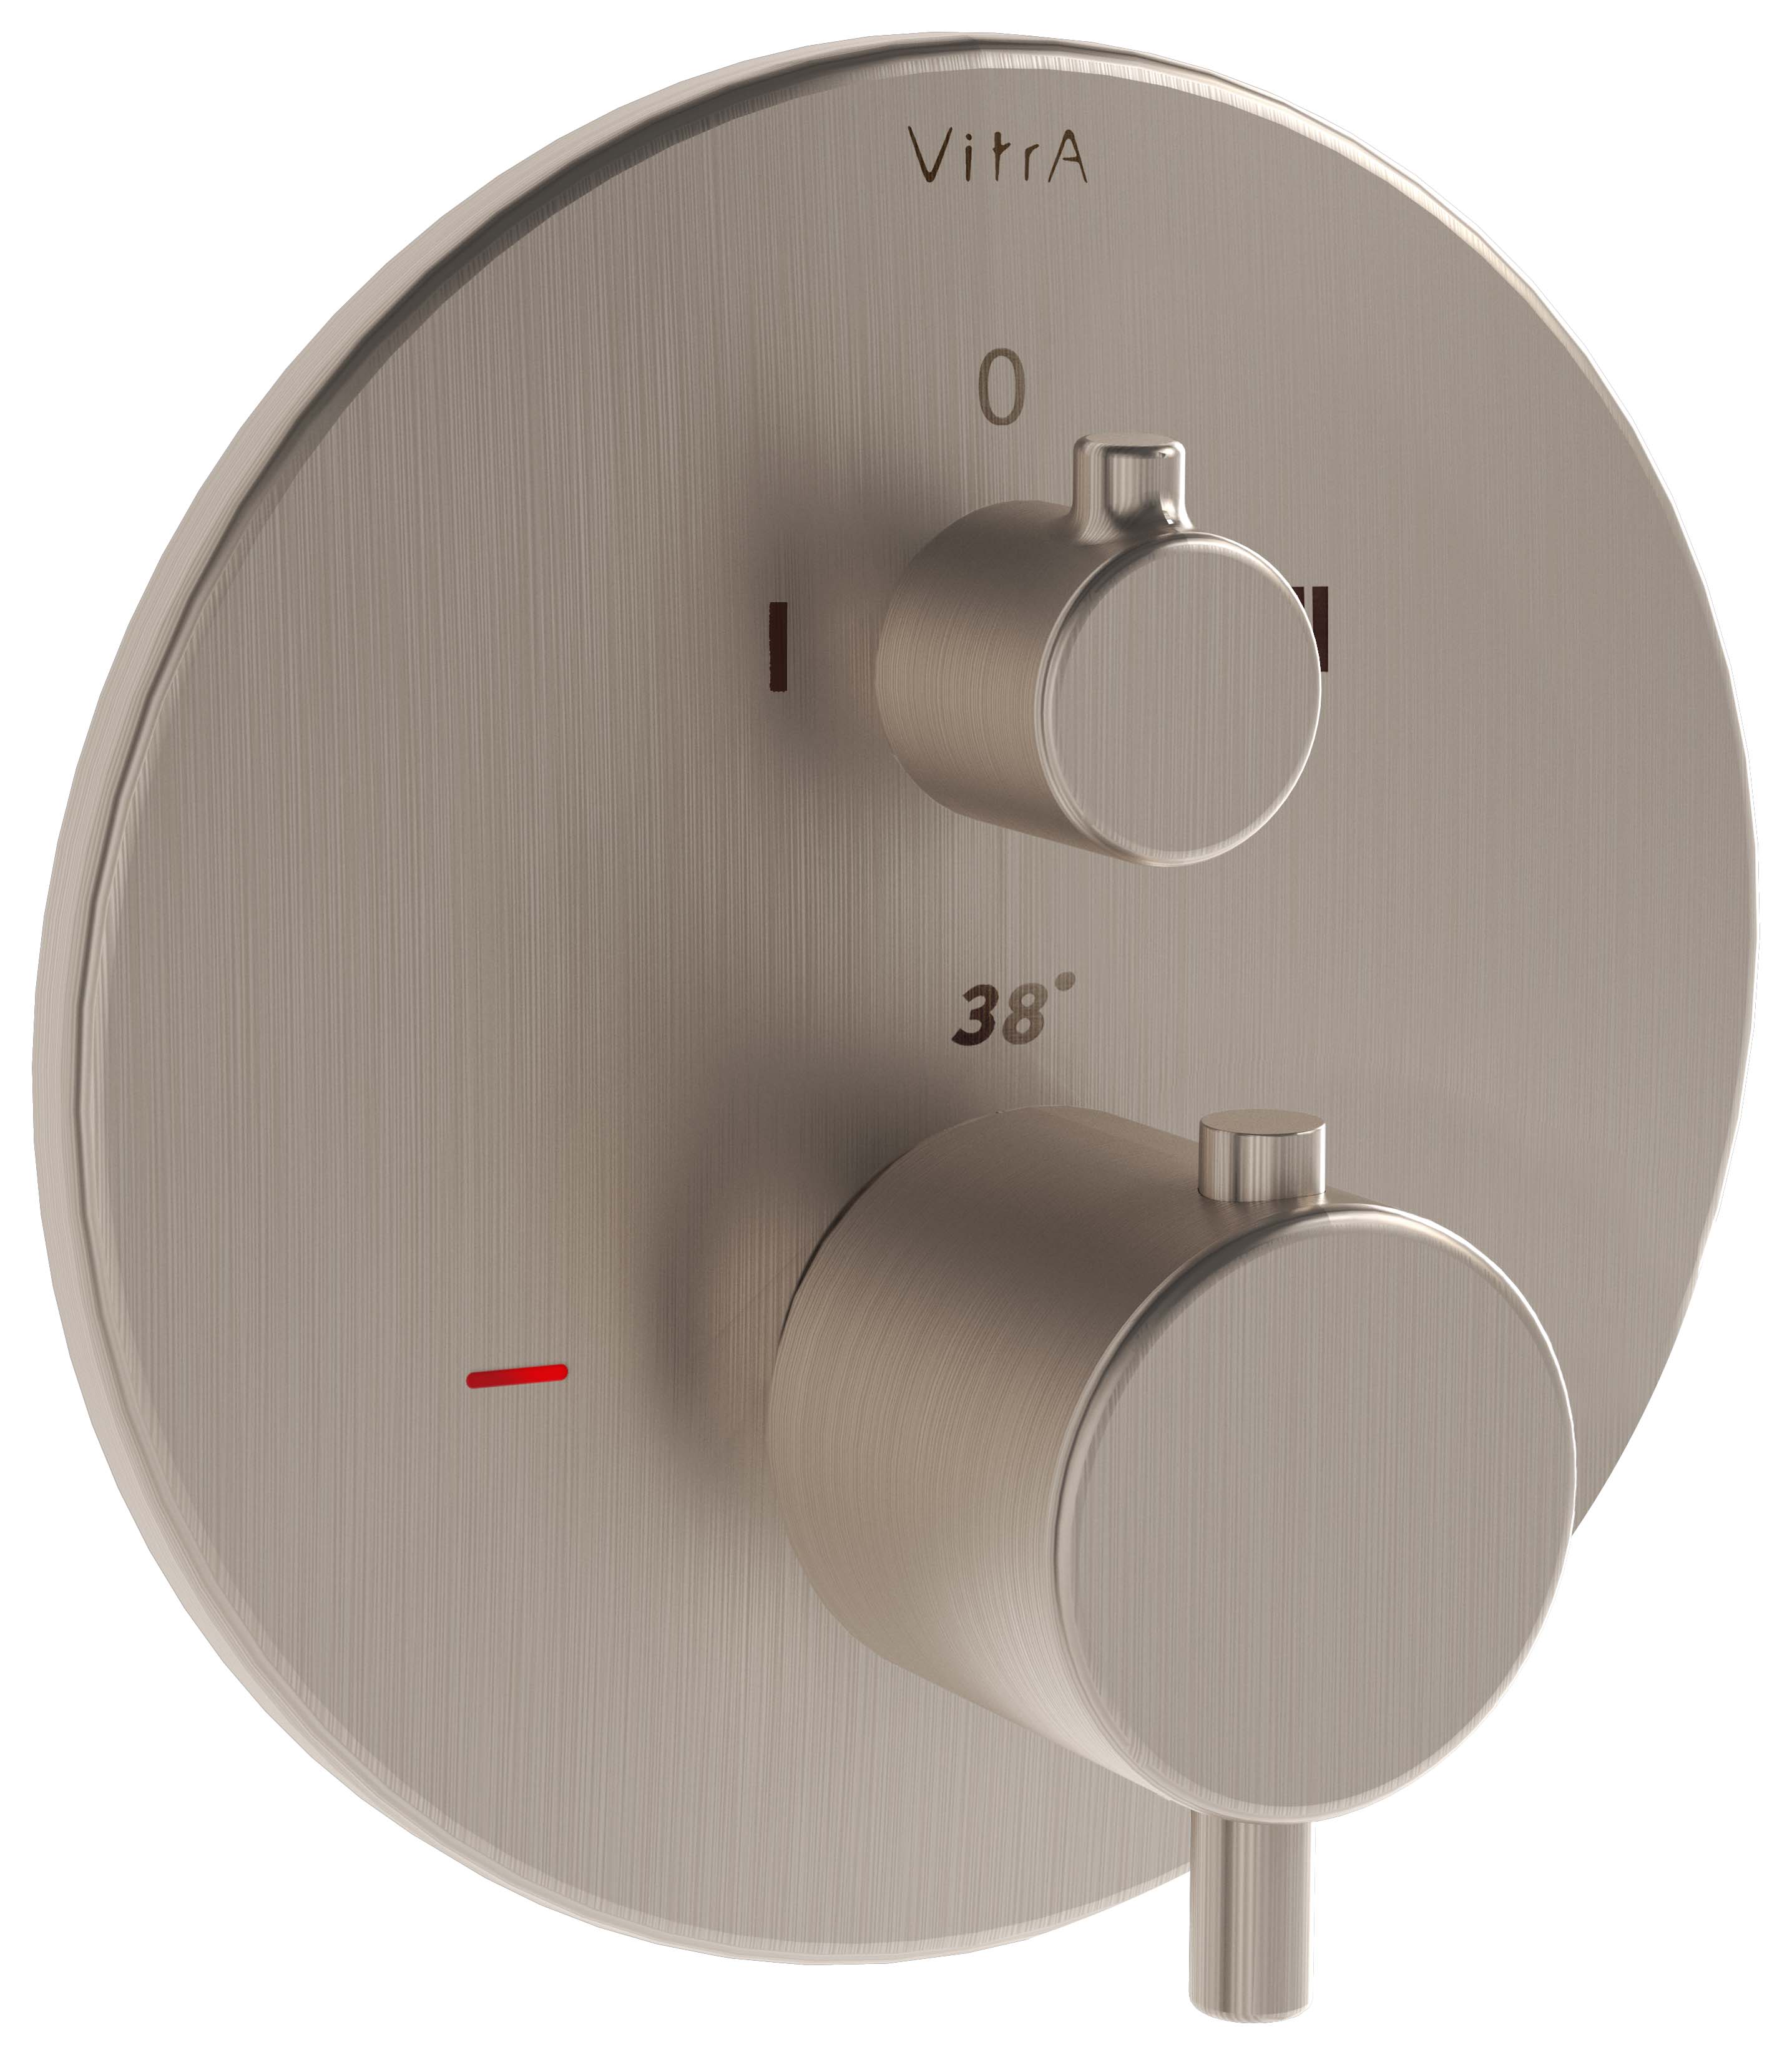 VitrA Origin Round Built-In 2 Way Thermostatic Shower Mixer Valve - Brushed Nickel